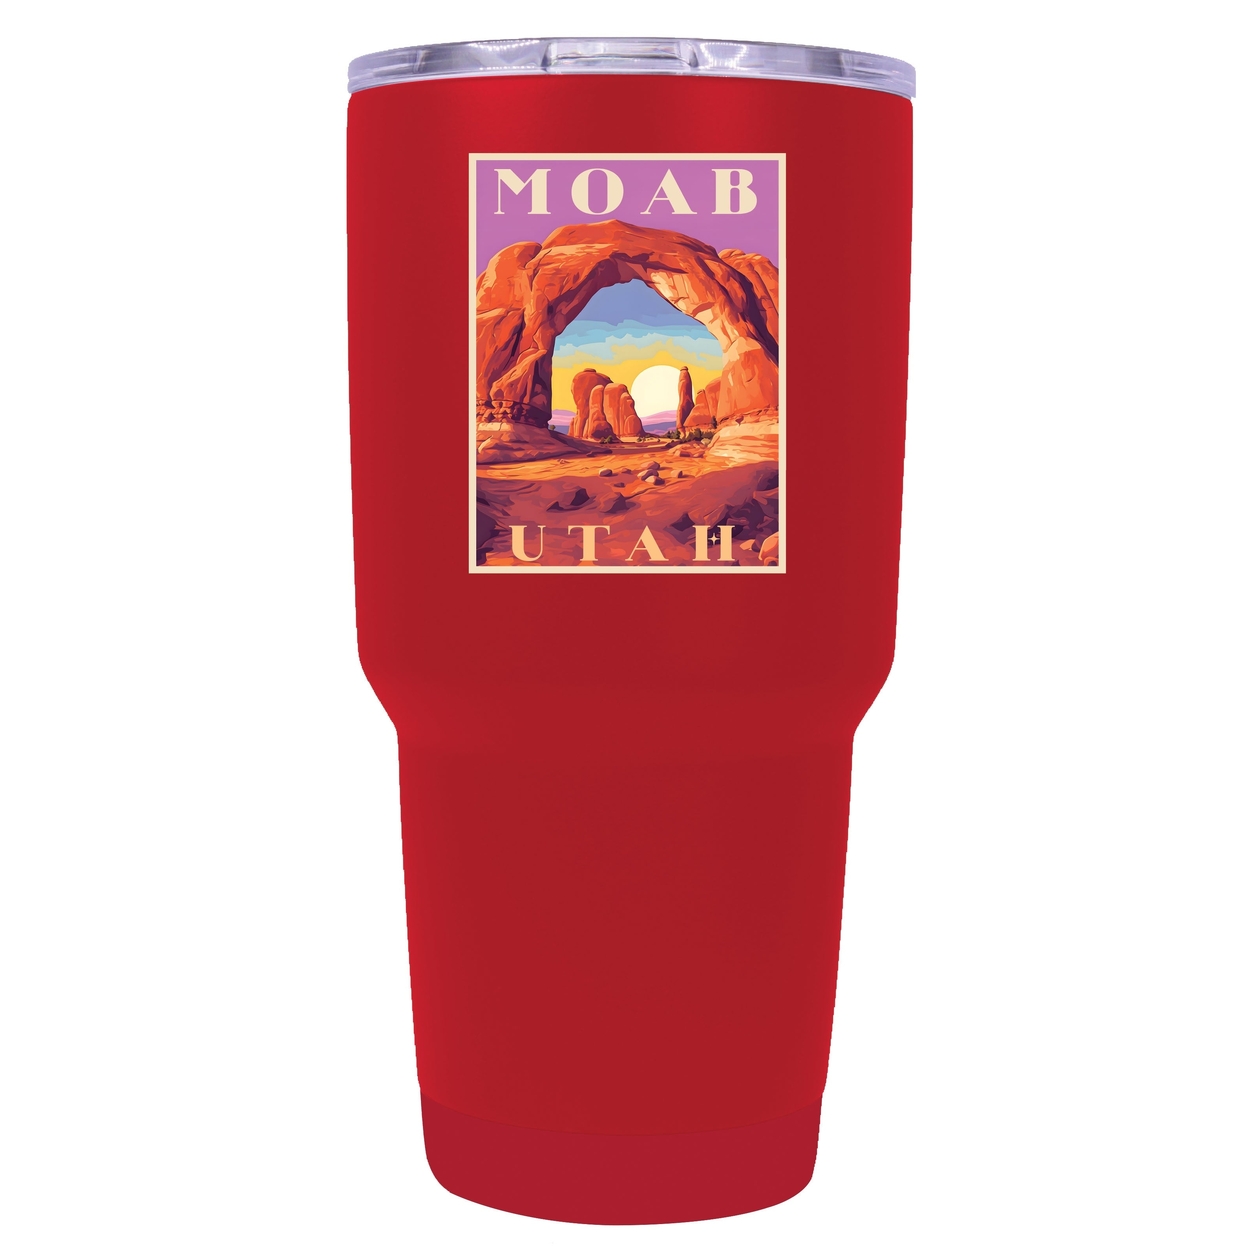 Moab Utah Souvenir 24 Oz Insulated Stainless Steel Tumbler - Red,,Single